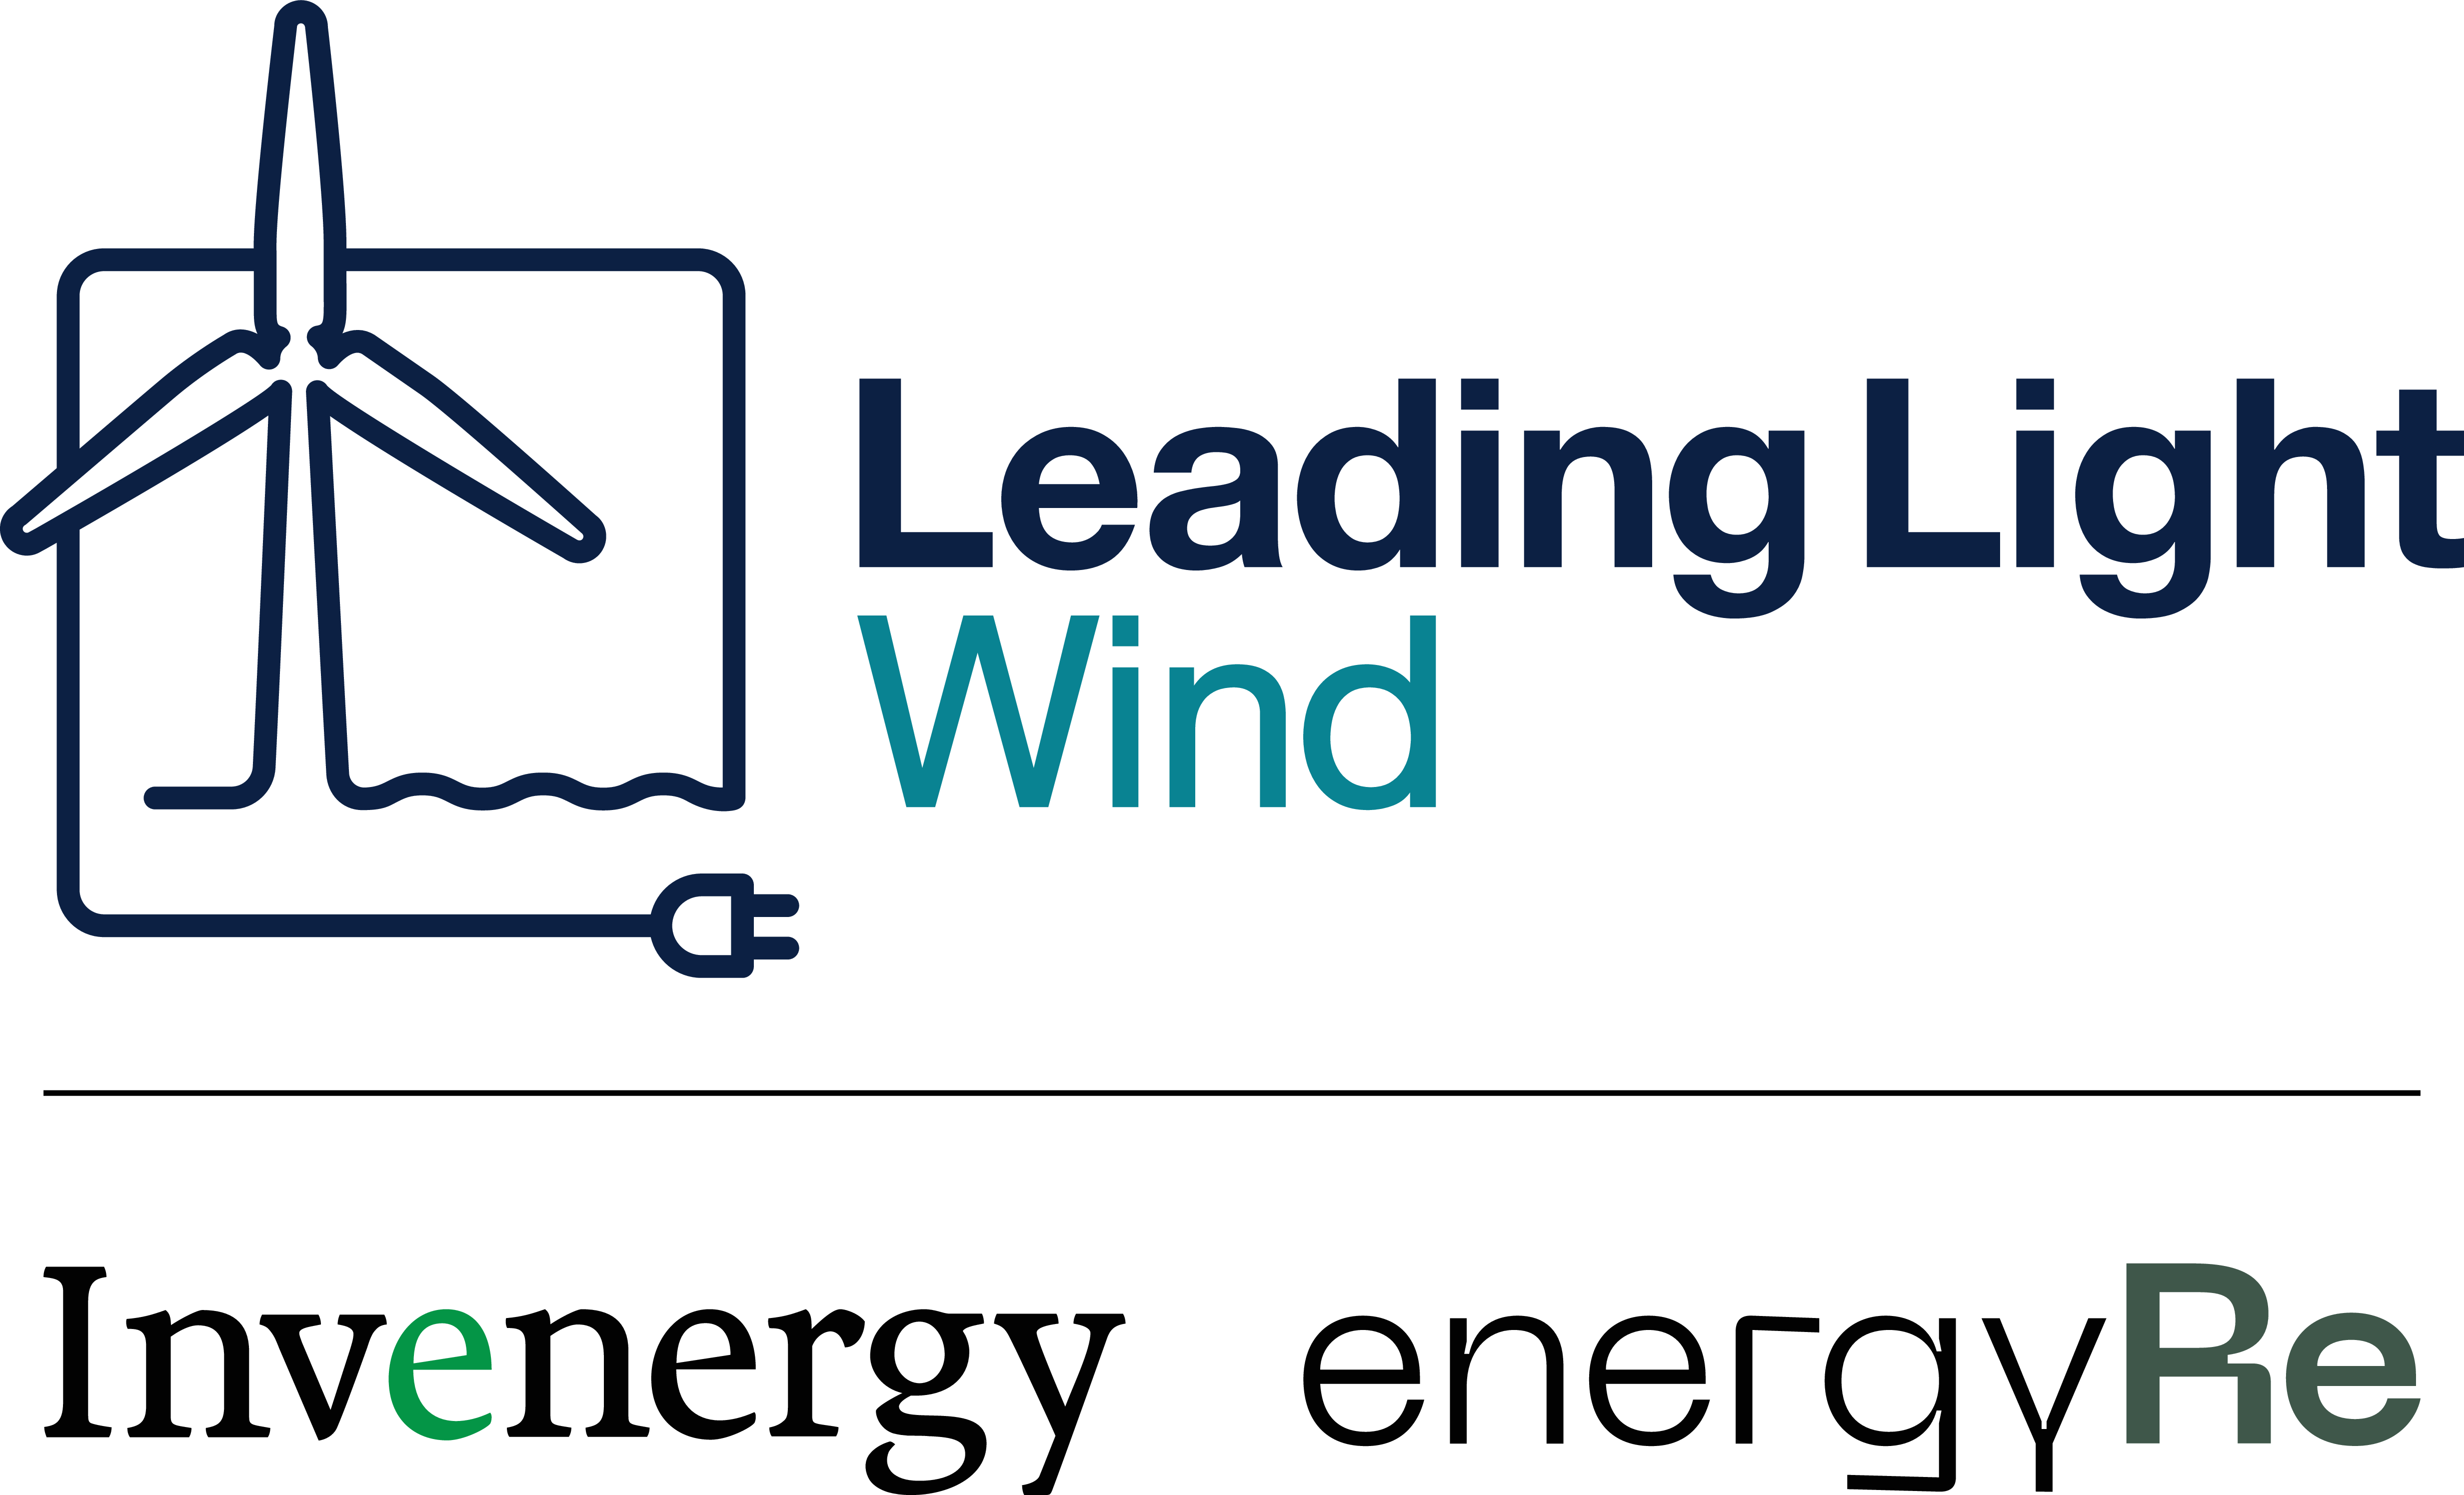 LLW Invenergy energy Re Logo Lockup 111423 4929x2990 022c376